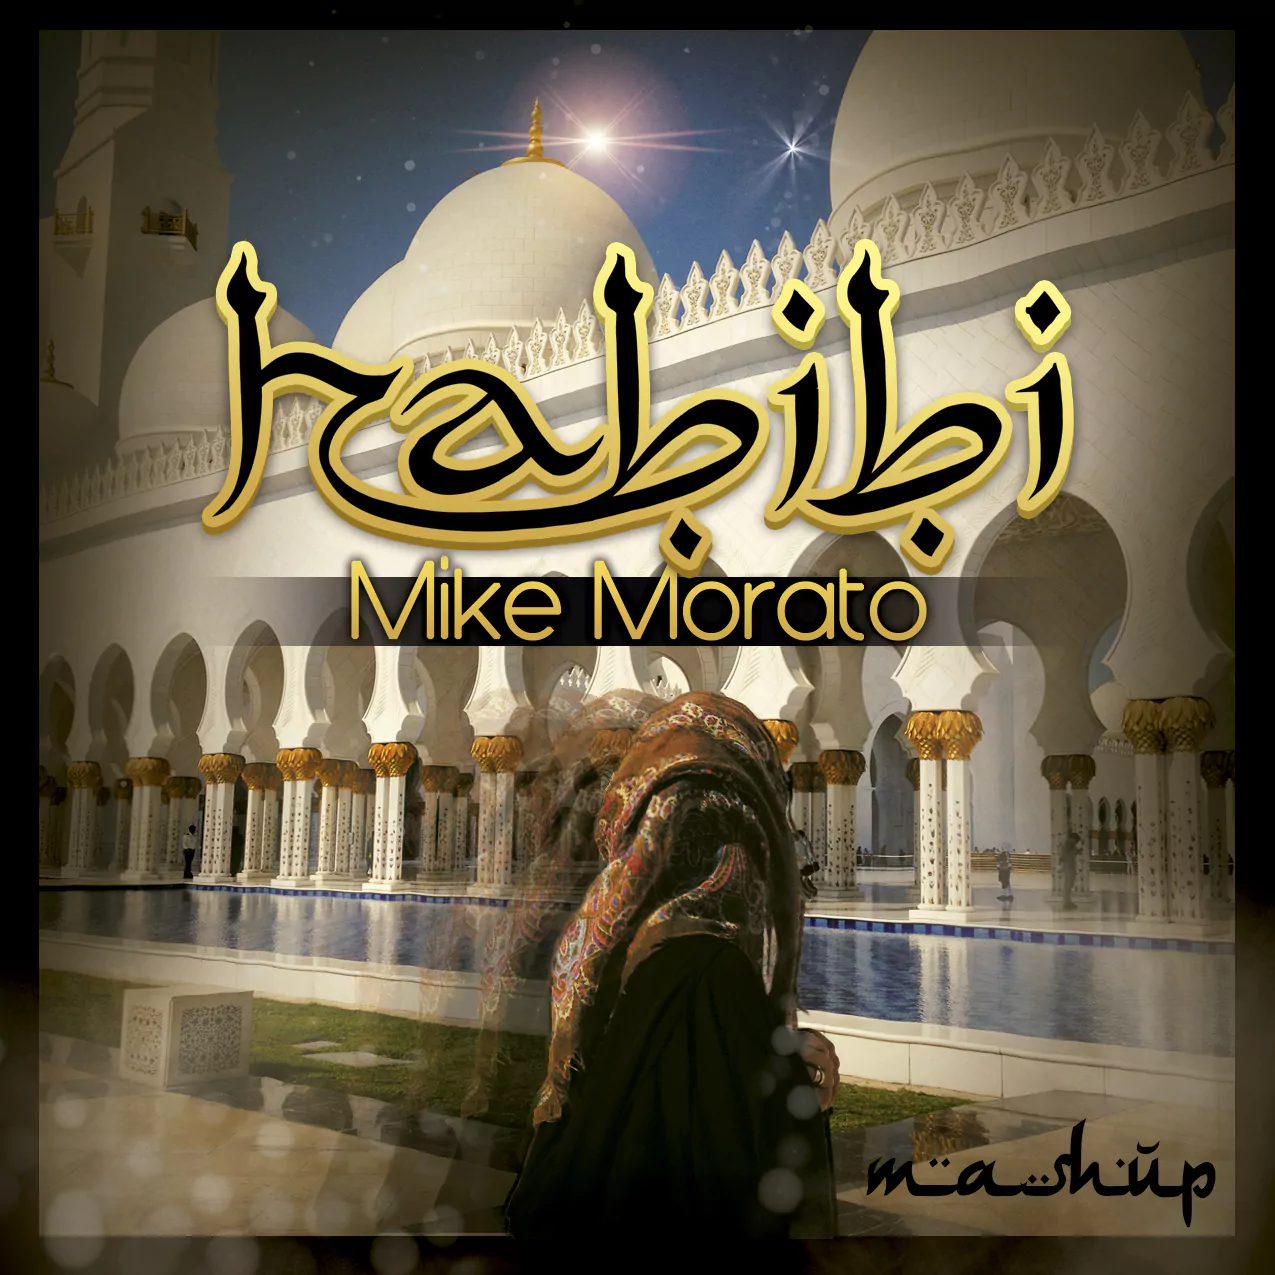 Mike Morato - Habibi (Mashup)